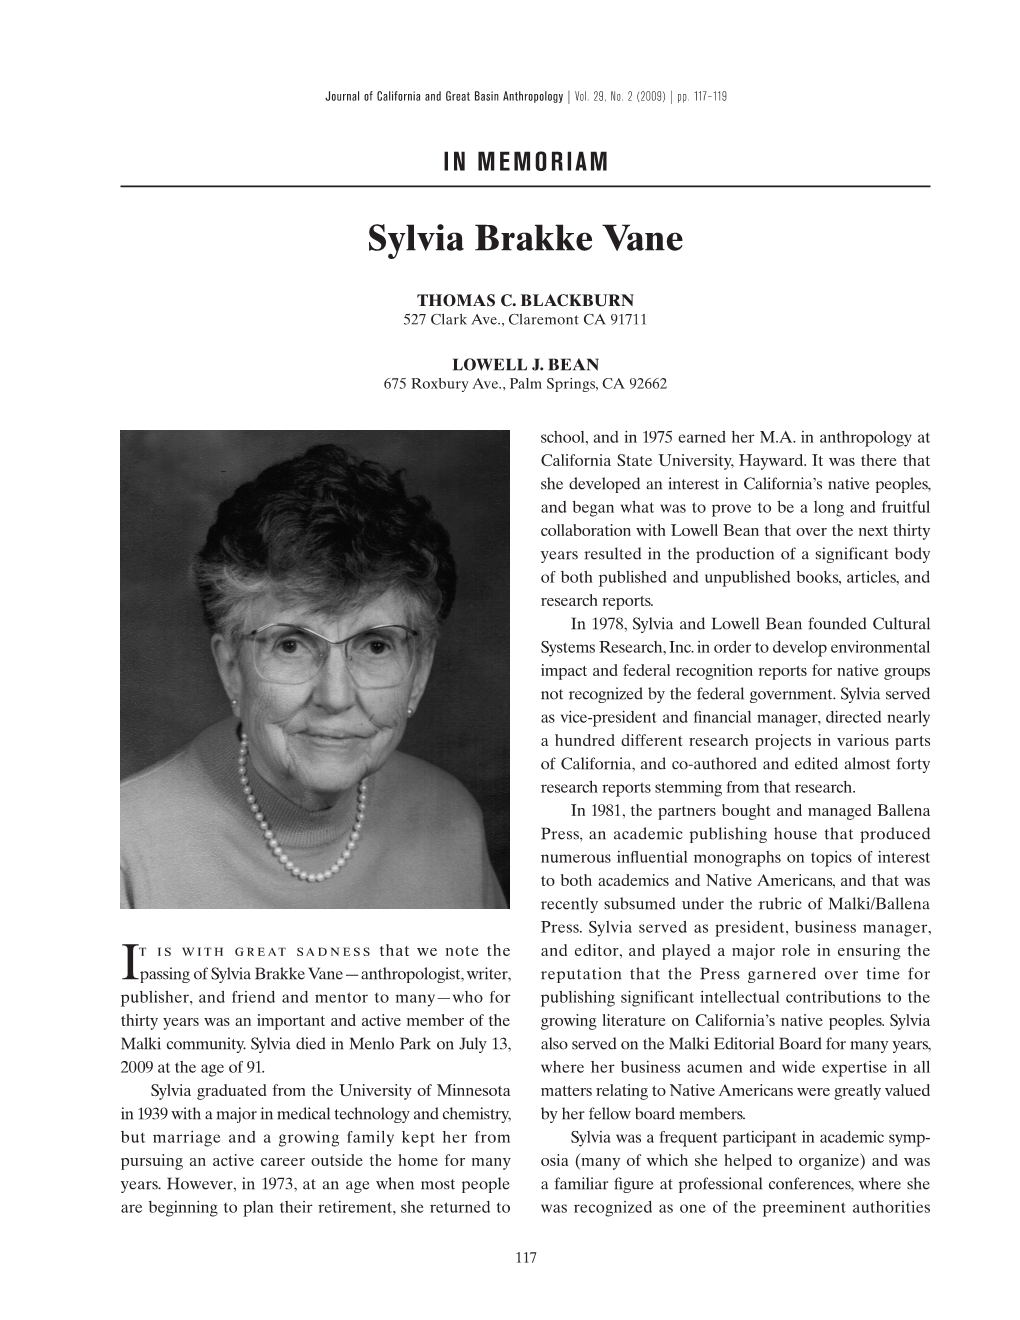 Sylvia Brakke Vane